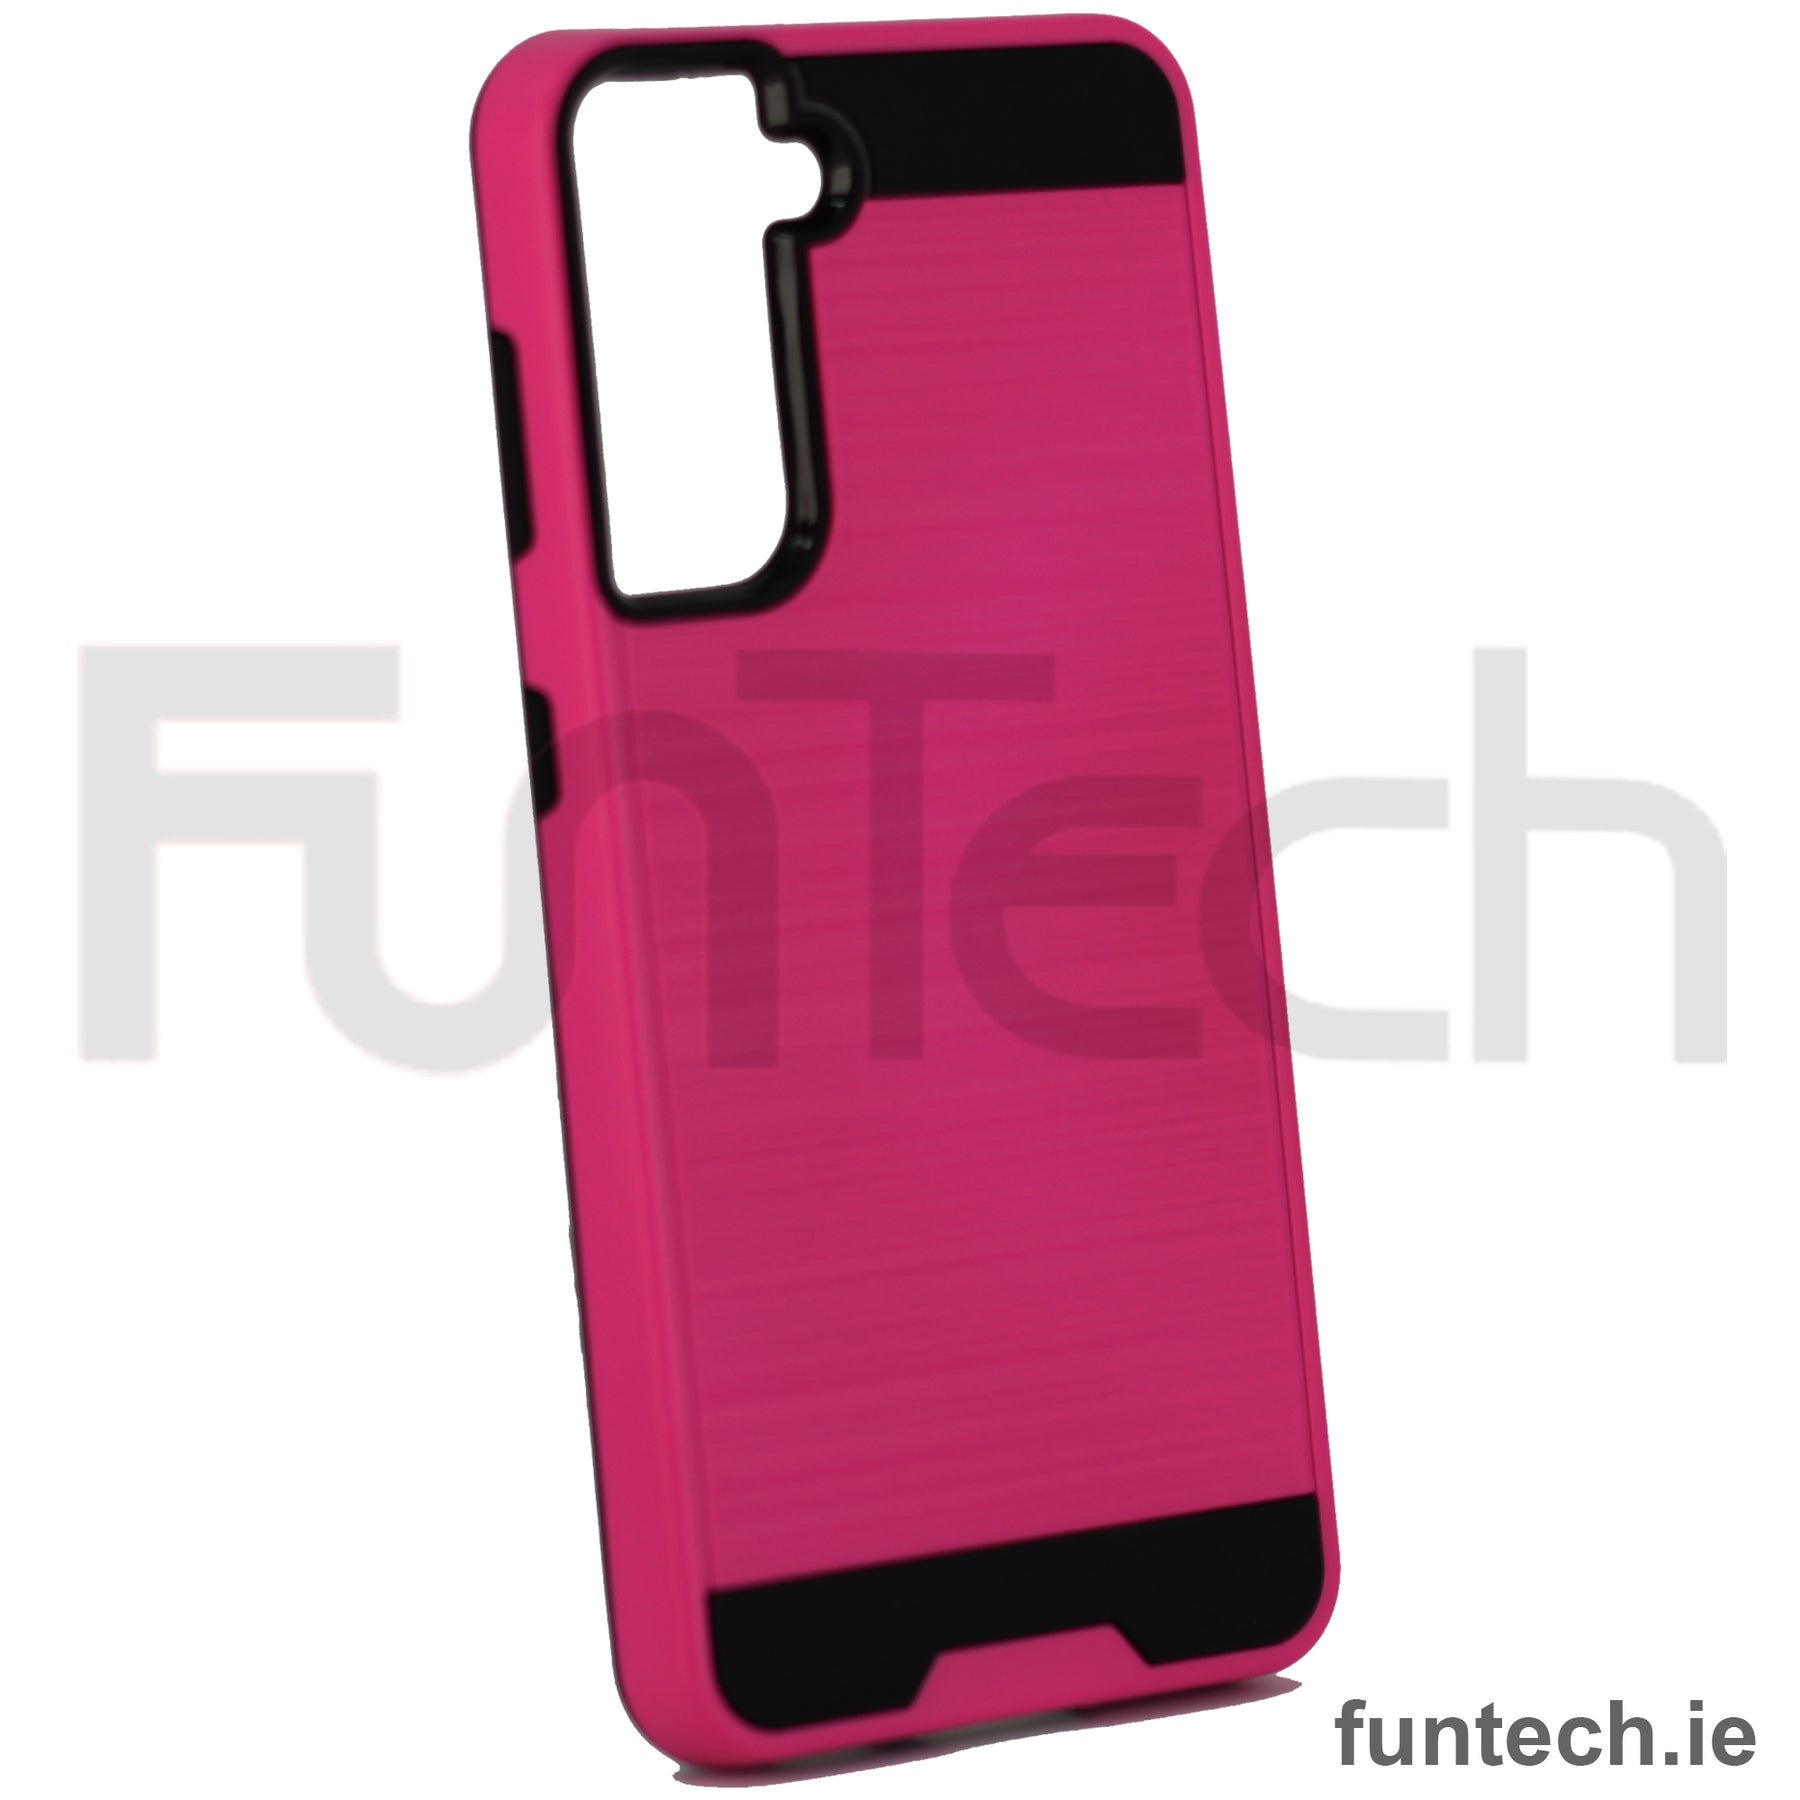 Samsung S21, Slim Armor Case, Color Pink.